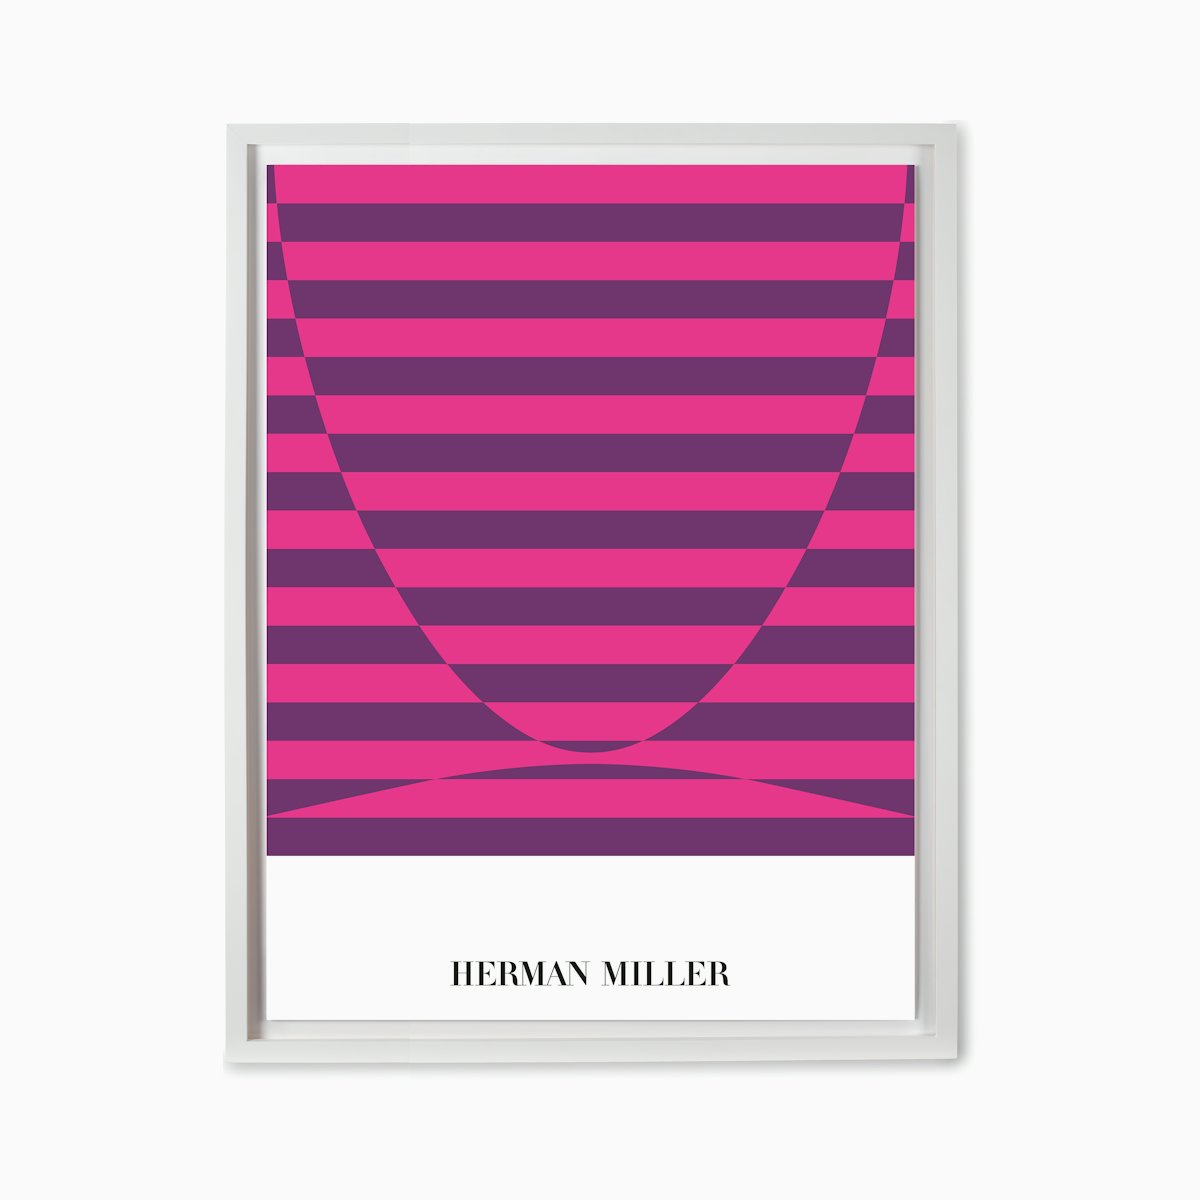 Herman Miller Brochure Covers Poster